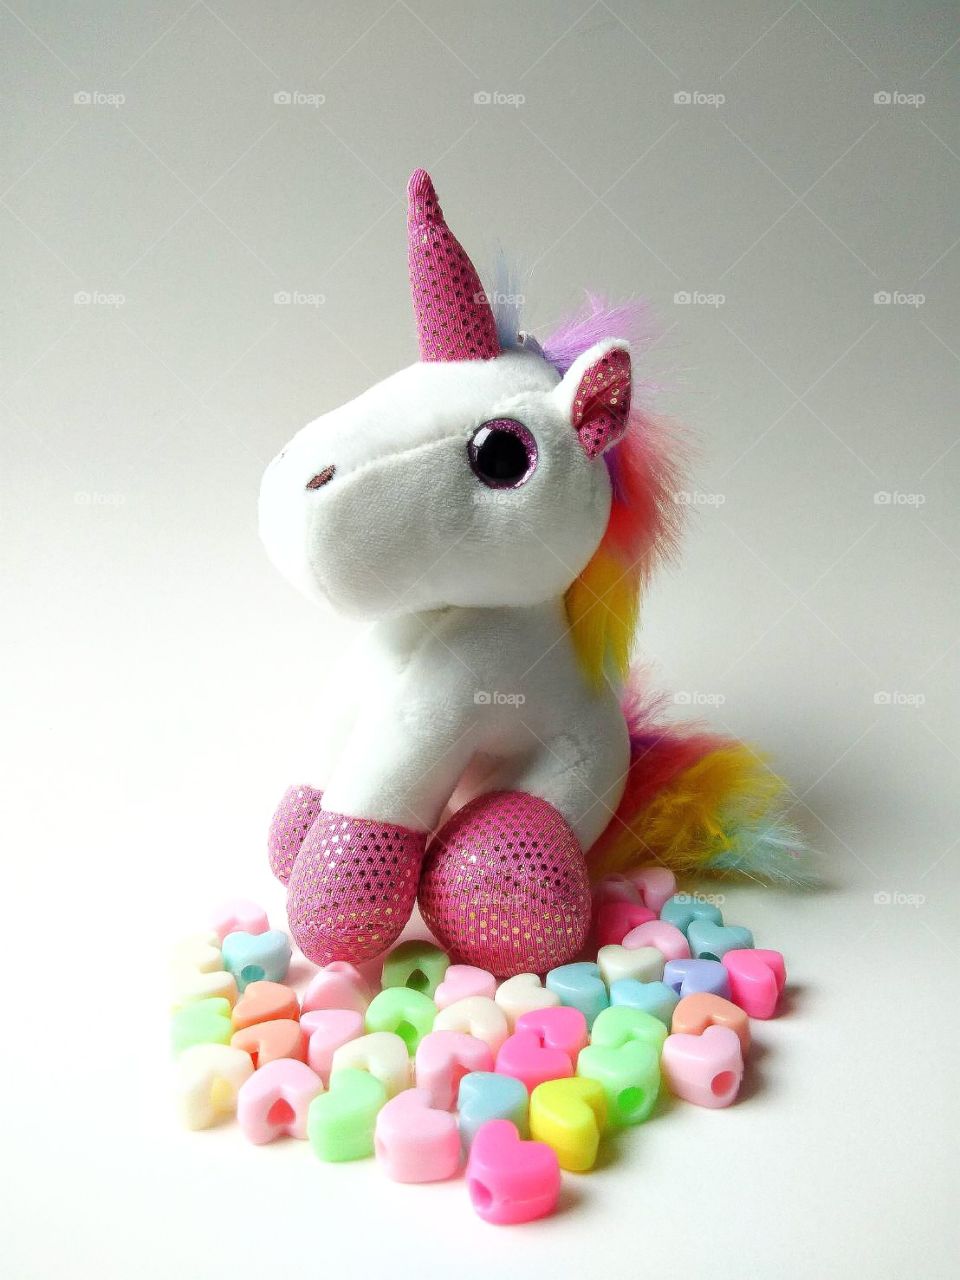 unicorn lover.